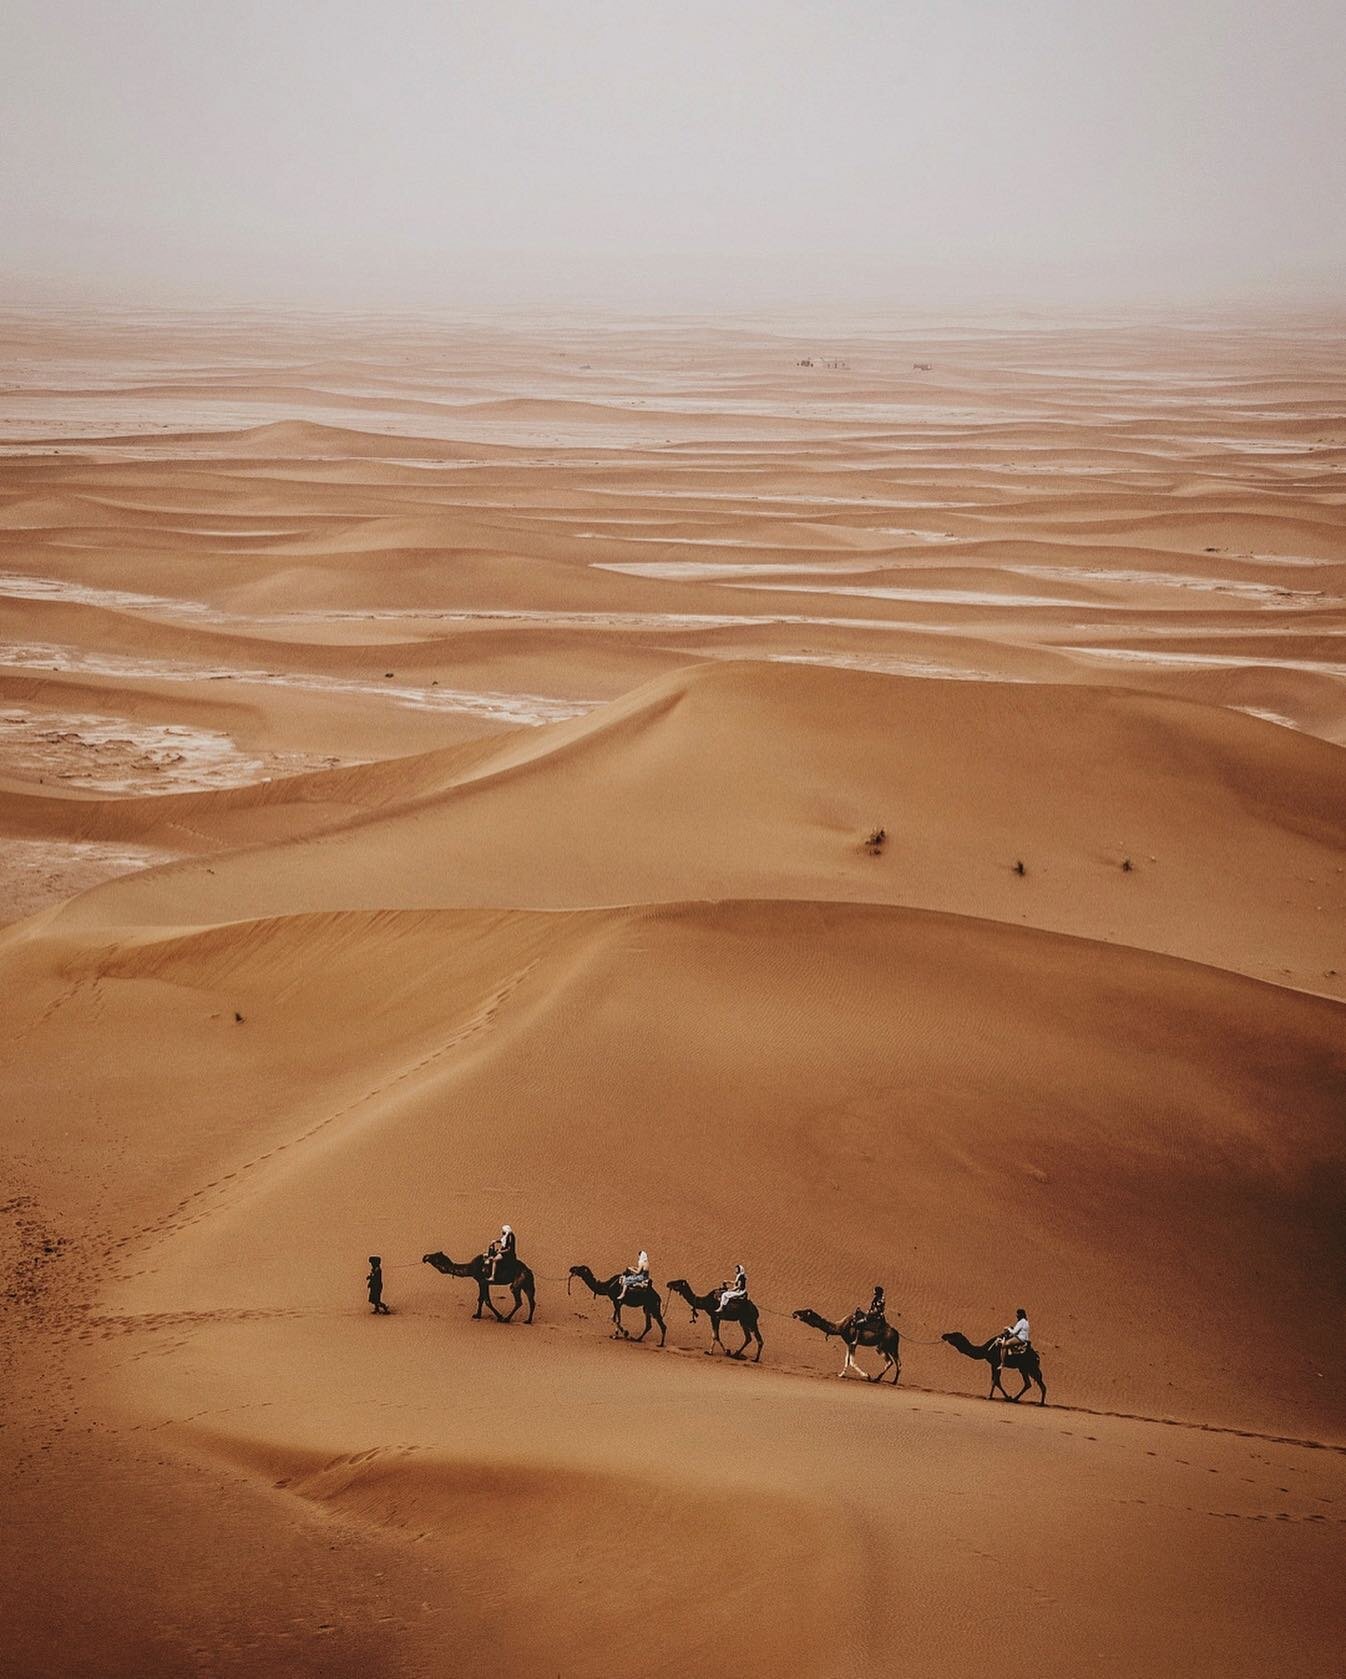 Intemporel le Sahara&hellip; 
Timeless the Sahara&hellip;
@terresdaventure 
#maroc
#morocco